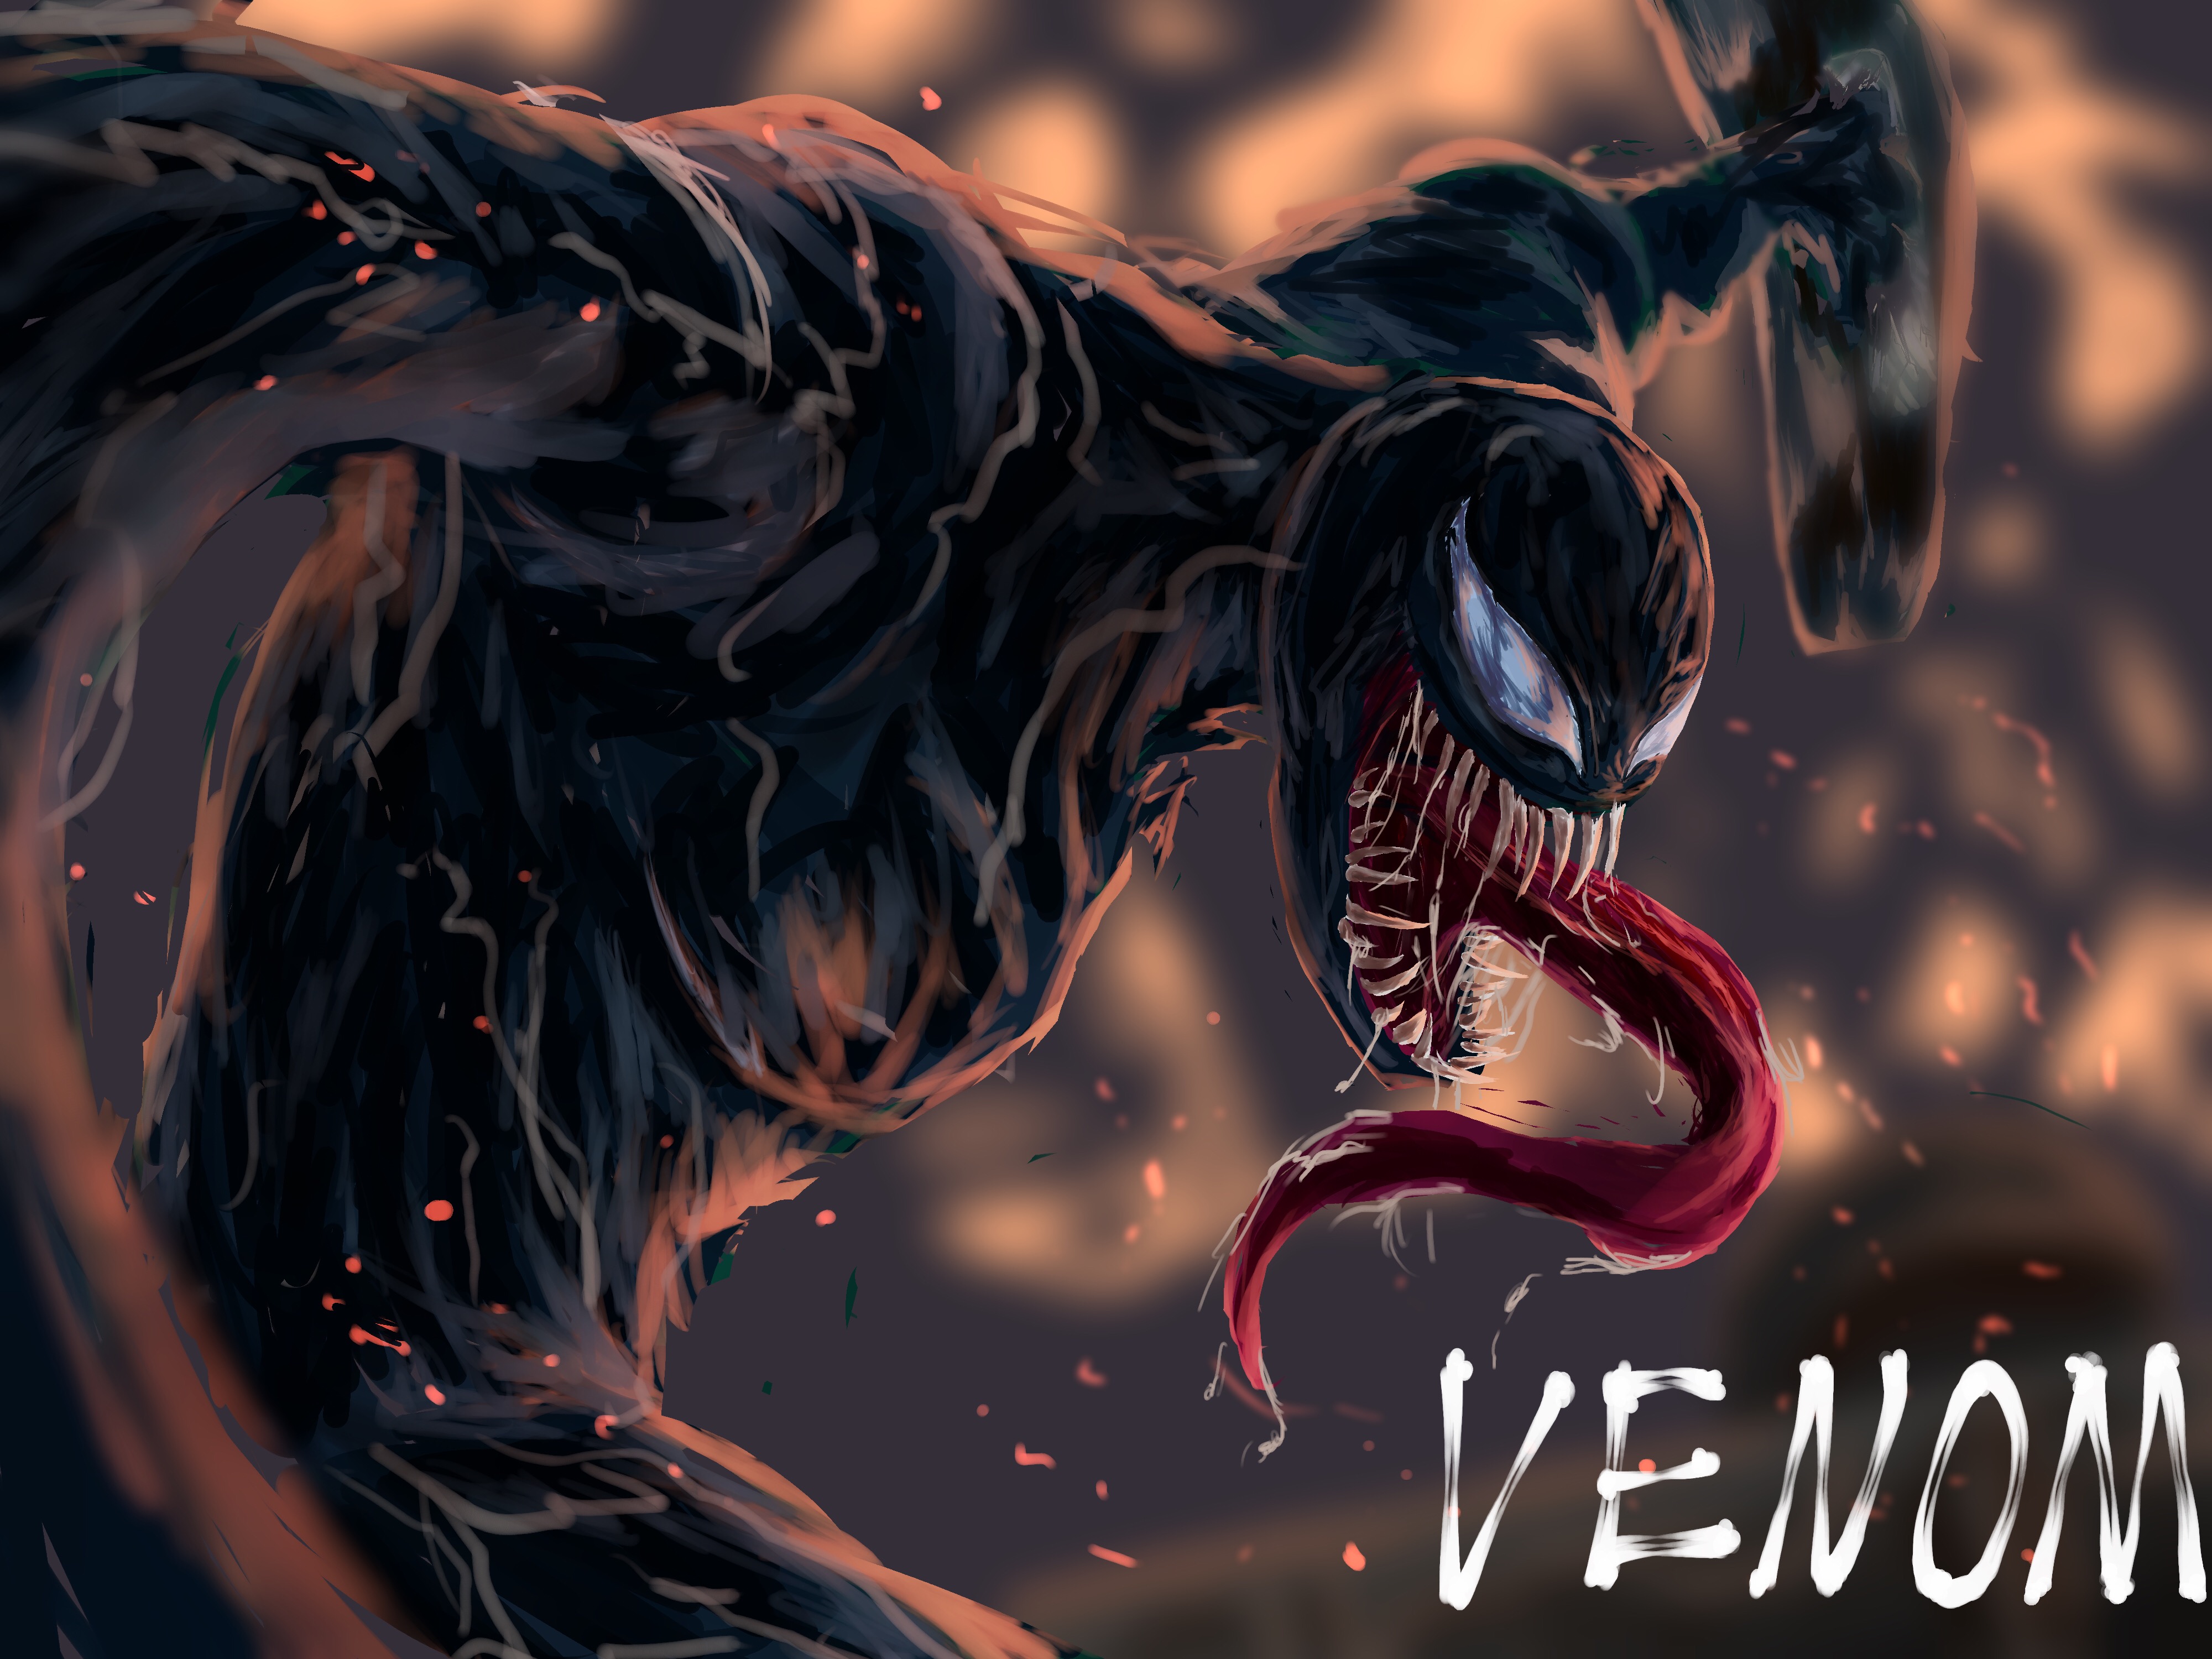 Comics Venom 4k Ultra HD Wallpaper by beef